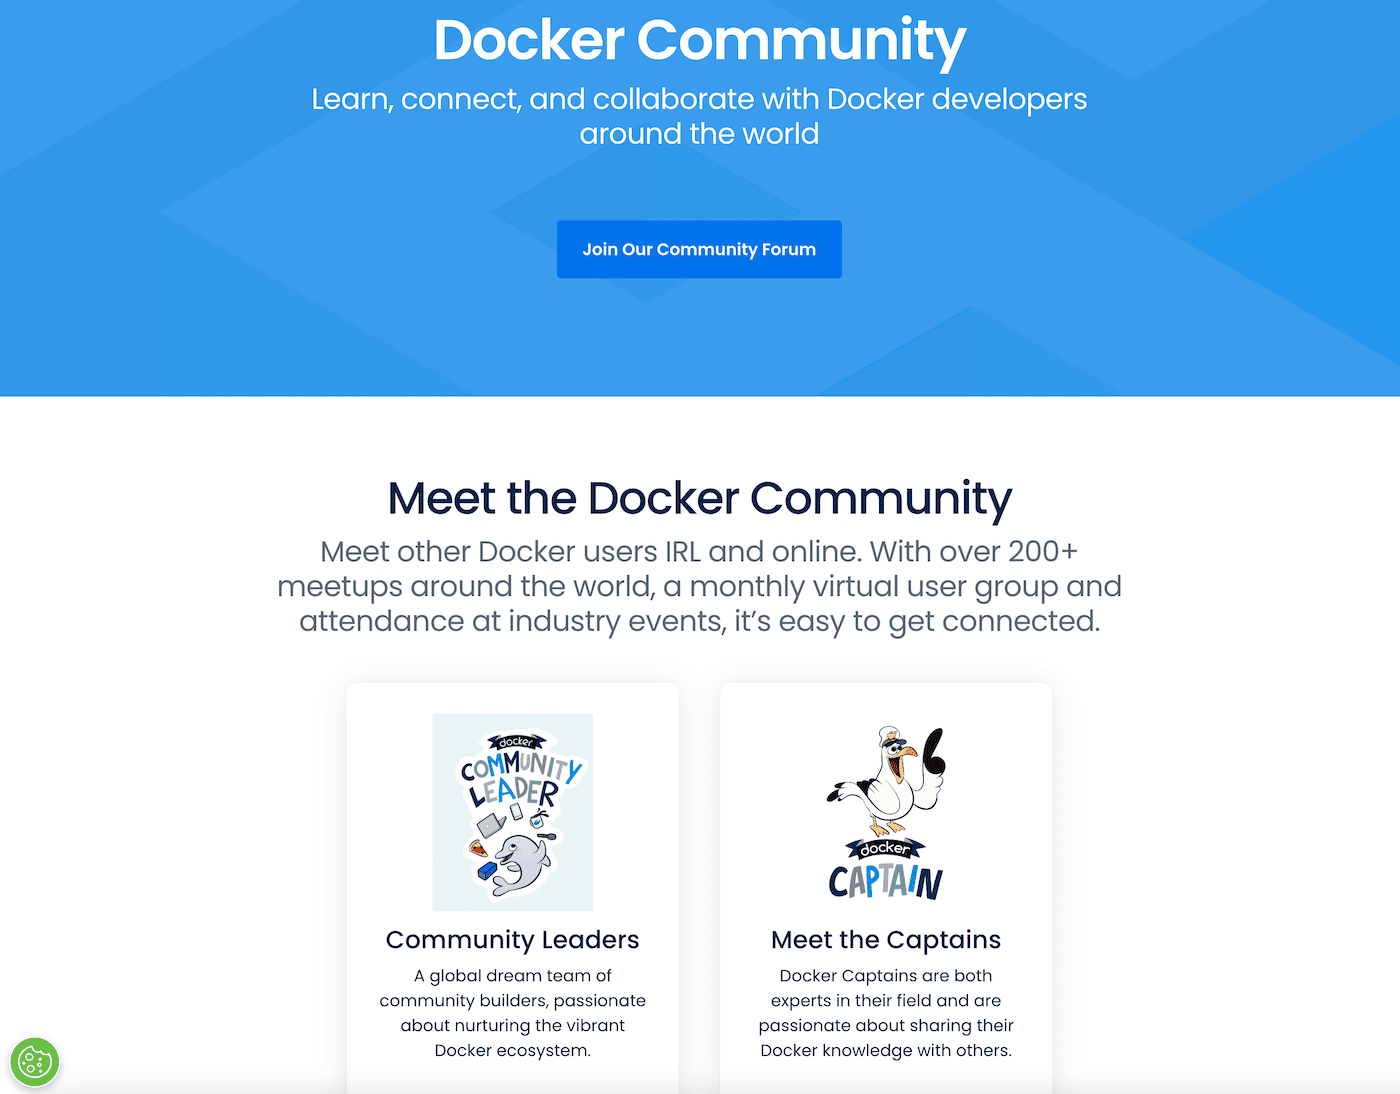 Communauté Docker